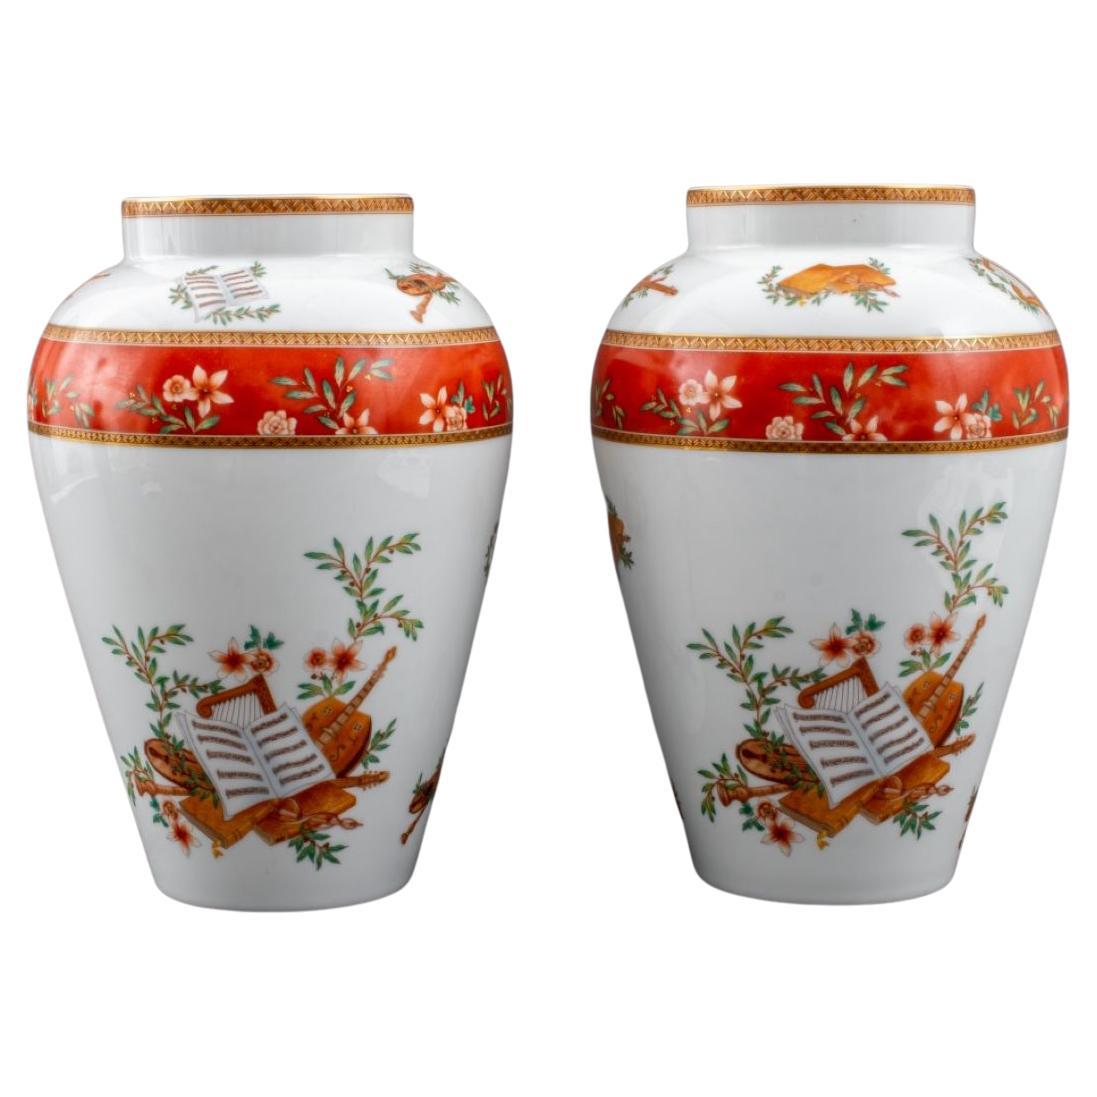 Medard de Noblat "Amadeus" Porcelain Vases, 2 For Sale